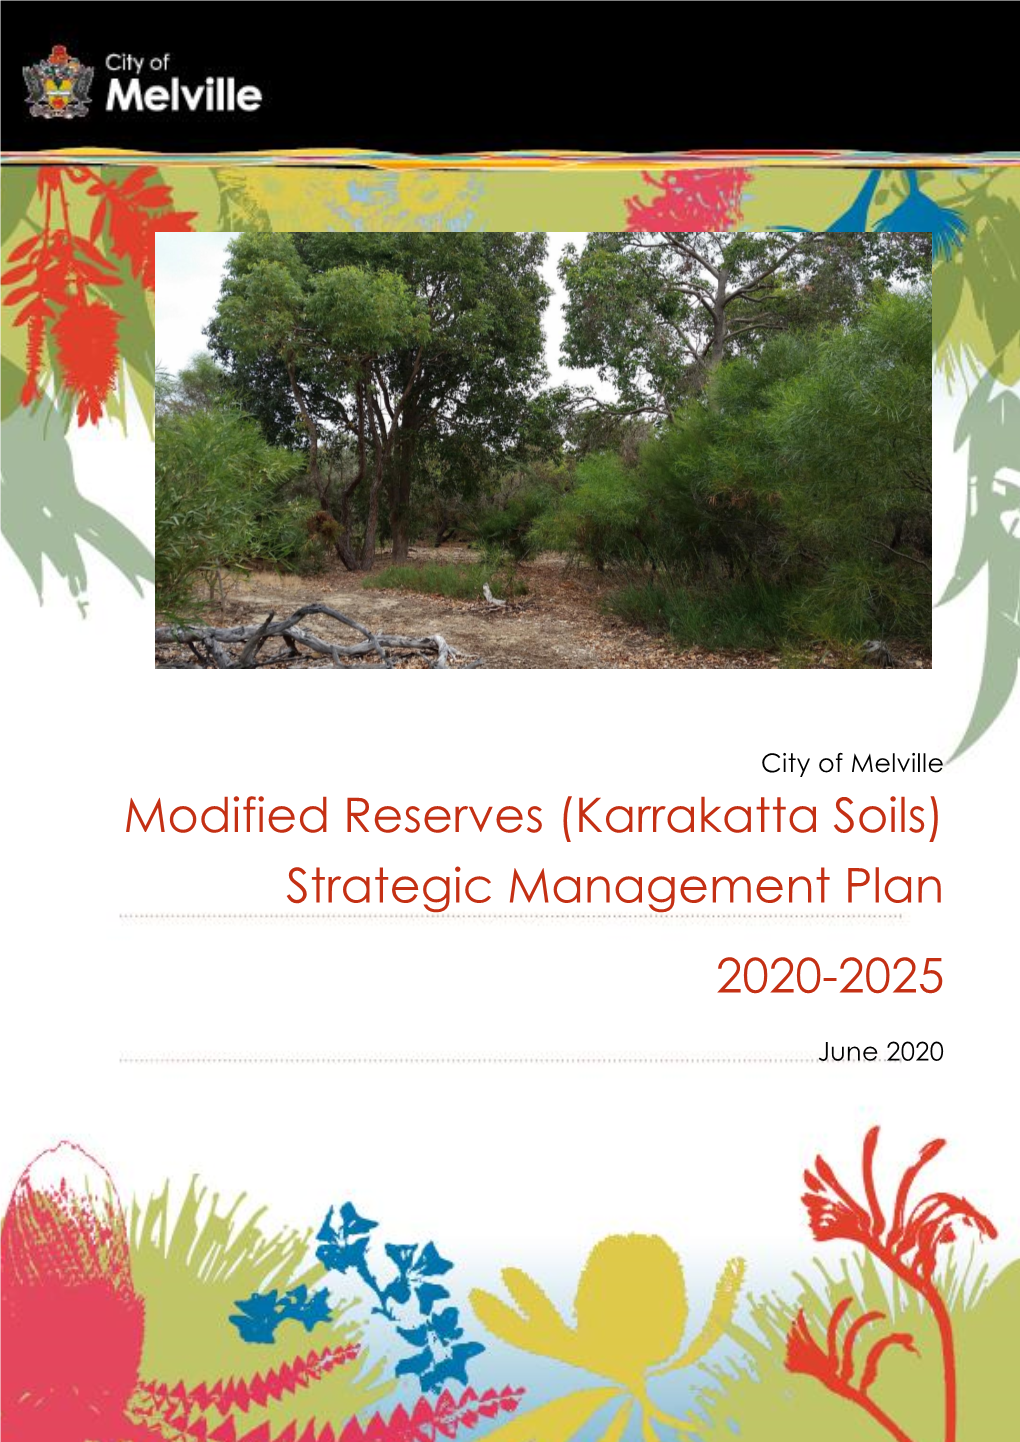 Modified Reserves (Karrakatta Soils) Strategic Management Plan 2020-2025